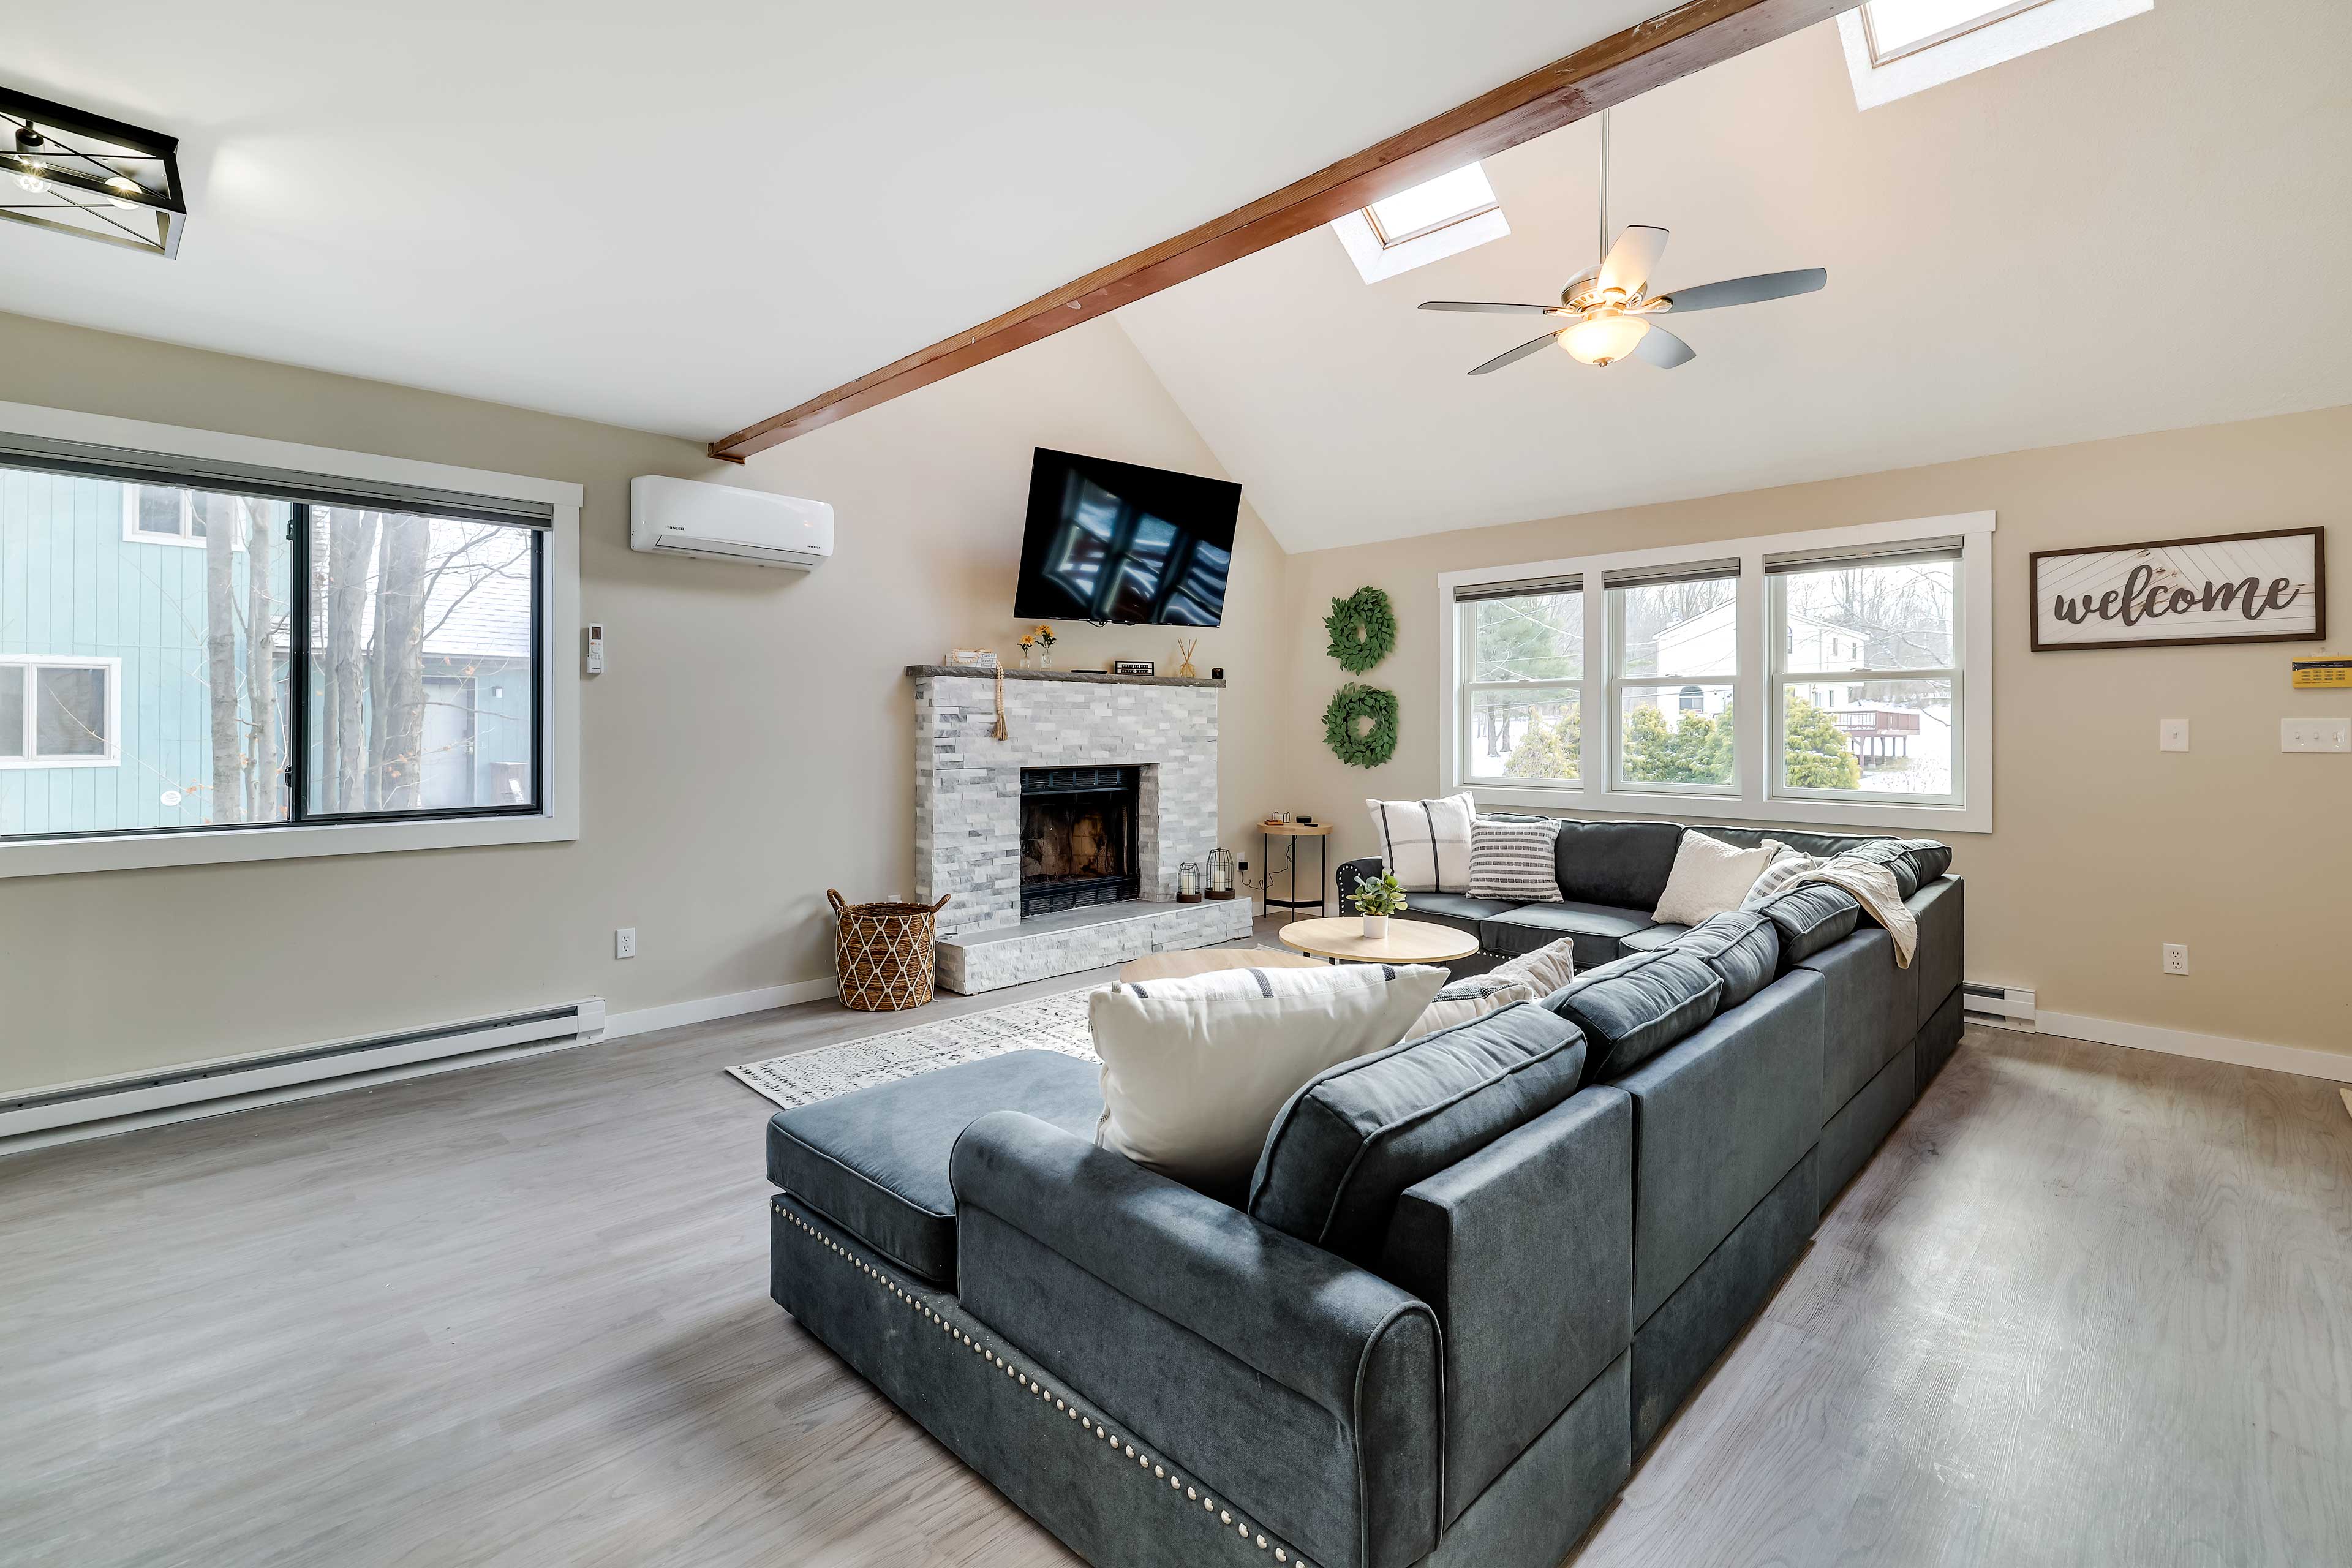 Living Room | Main Level | Smart TV | Fireplace (Decorative)